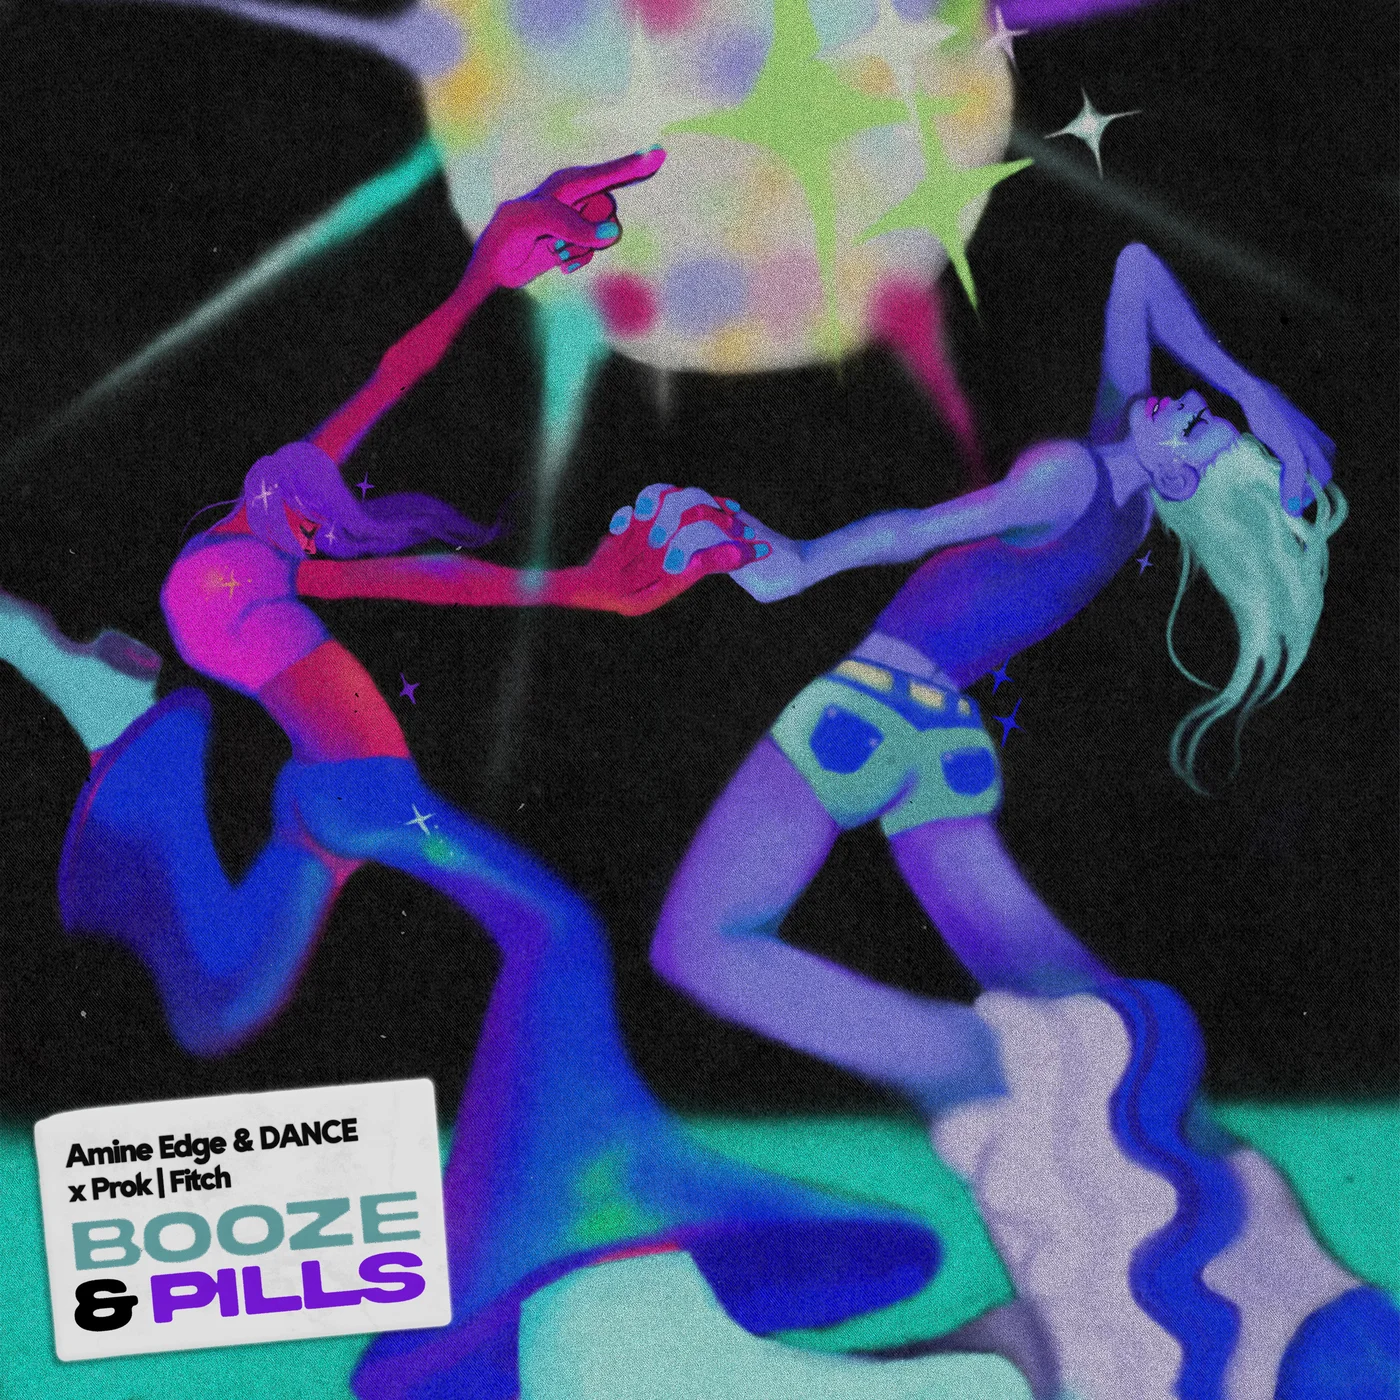 Amine Edge & DANCE x Prok & Fitch - Booze & Pills (Extended Mix)